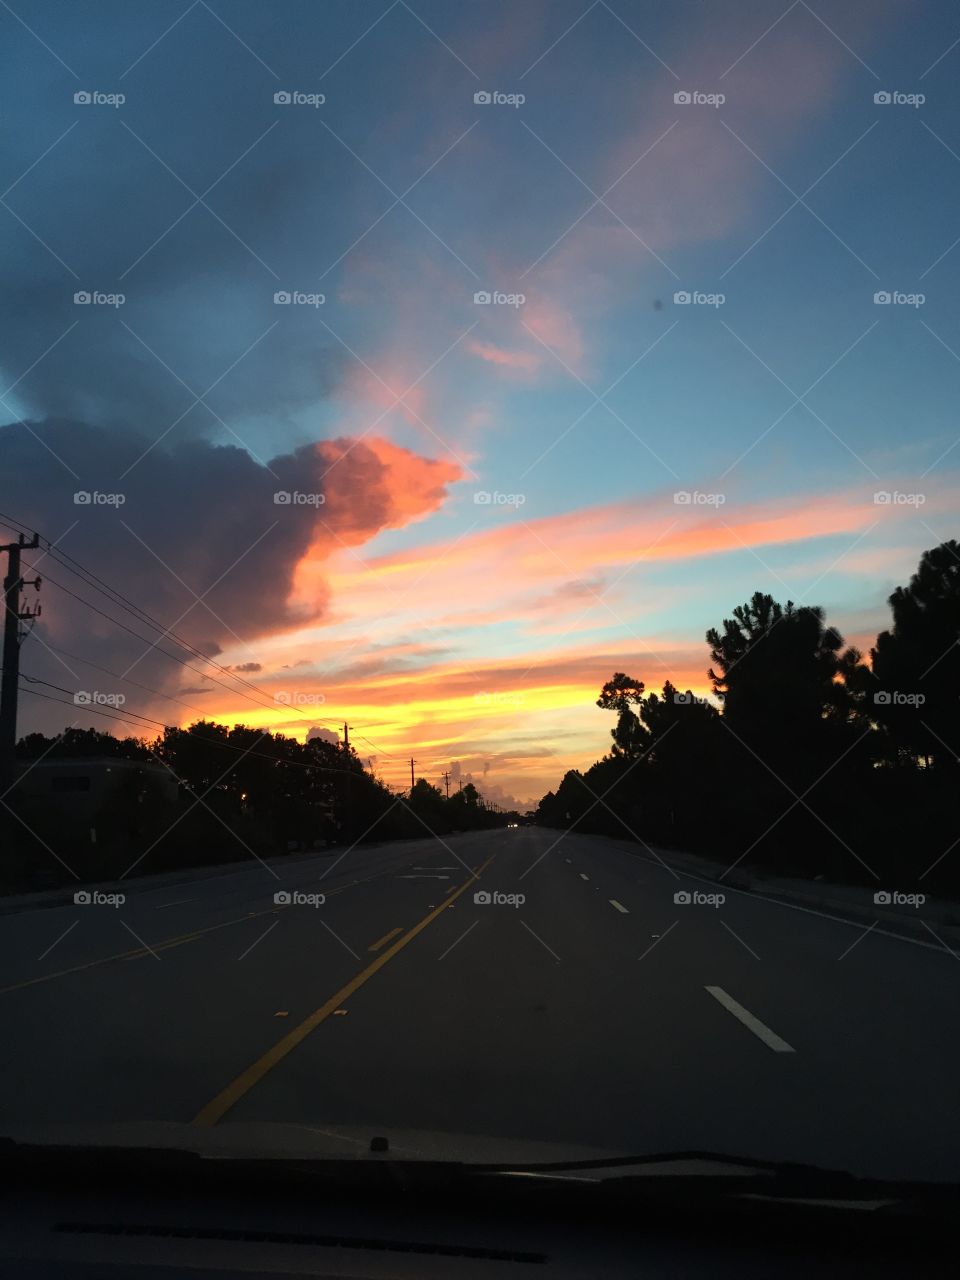 Sunset, Landscape, Storm, Light, Road